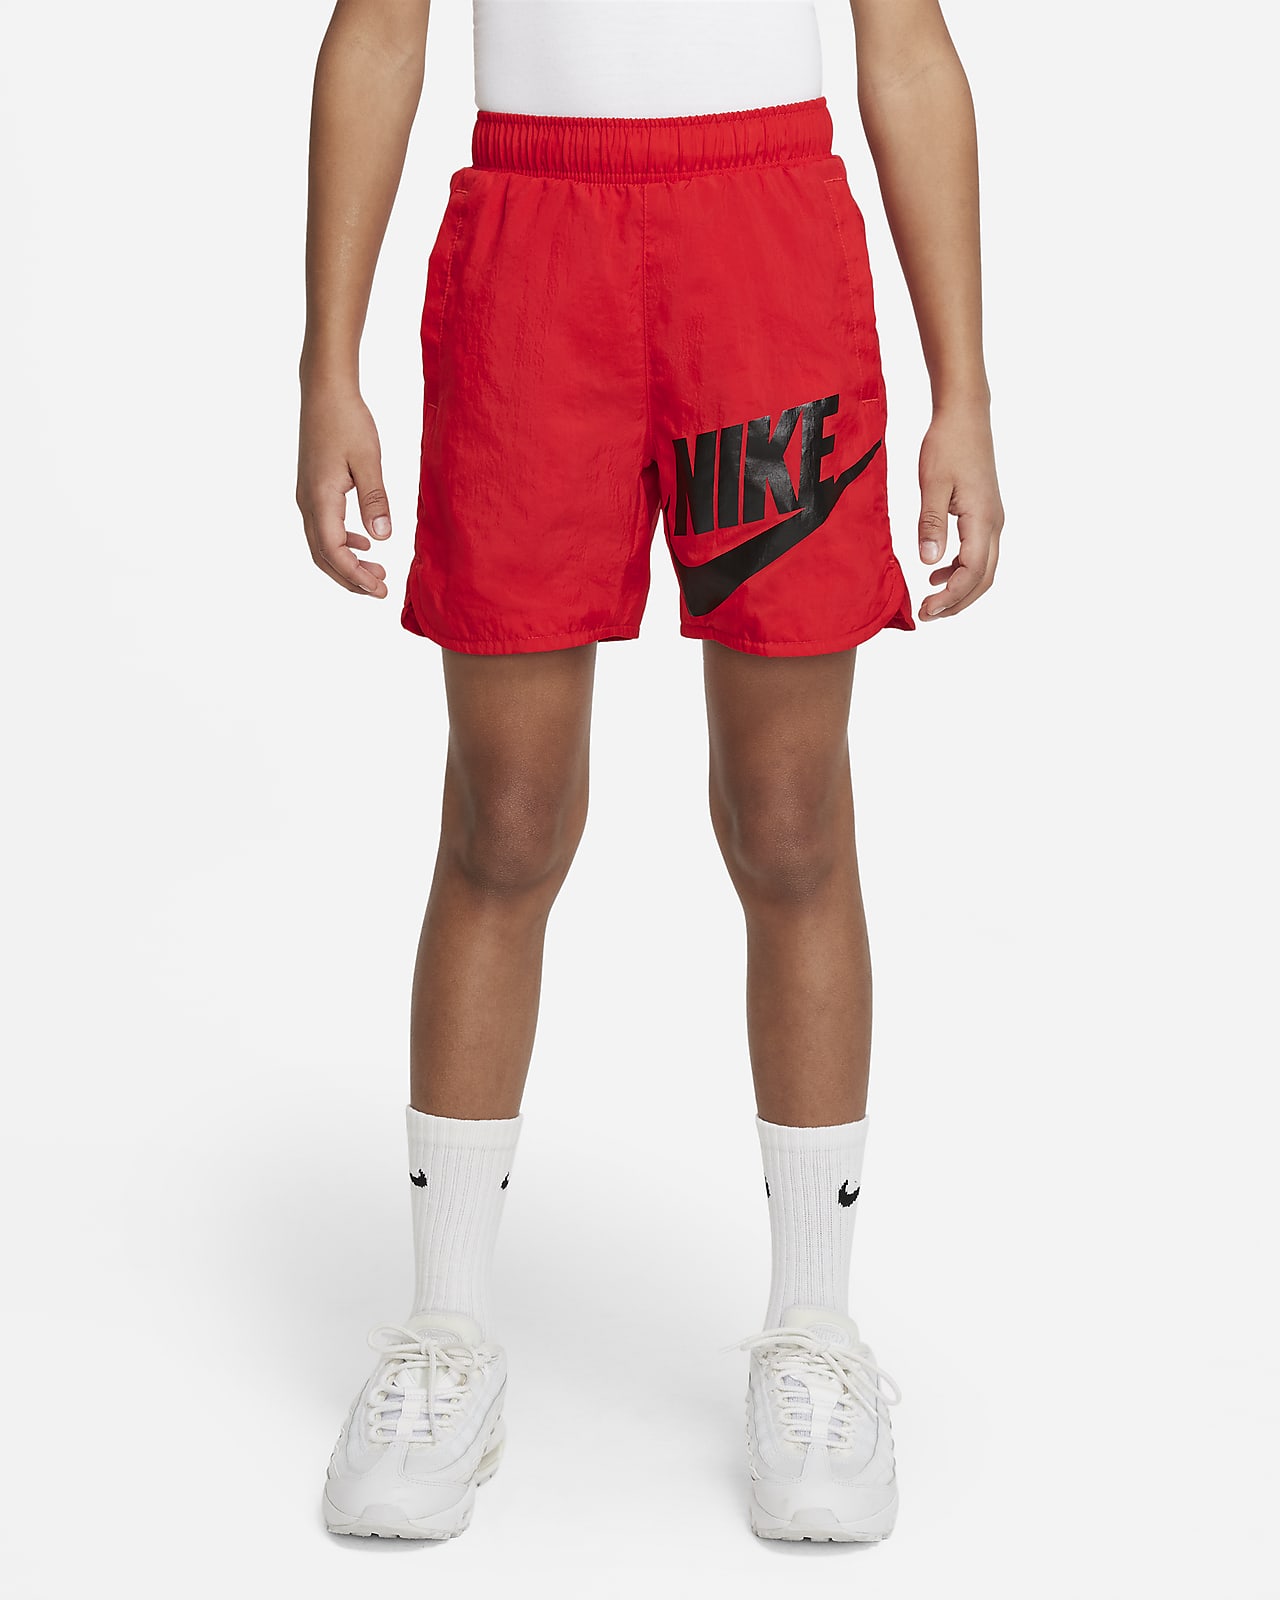 J short. Nike circa шорты.